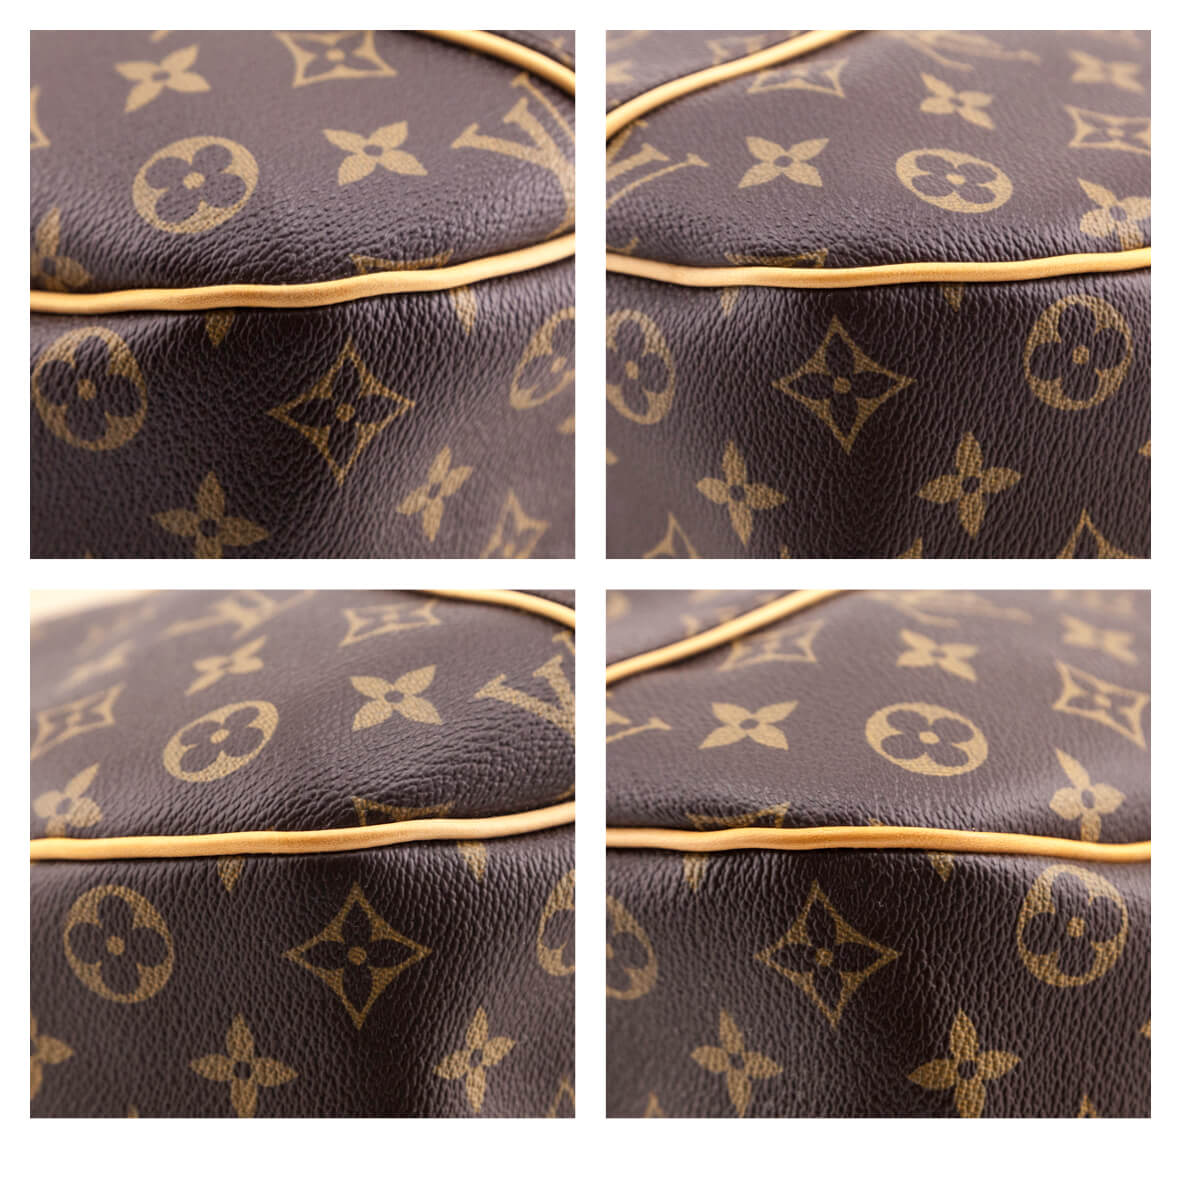 PRELOVED Louis Vuitton Galleria PM Monogram Bag AA1019 033023